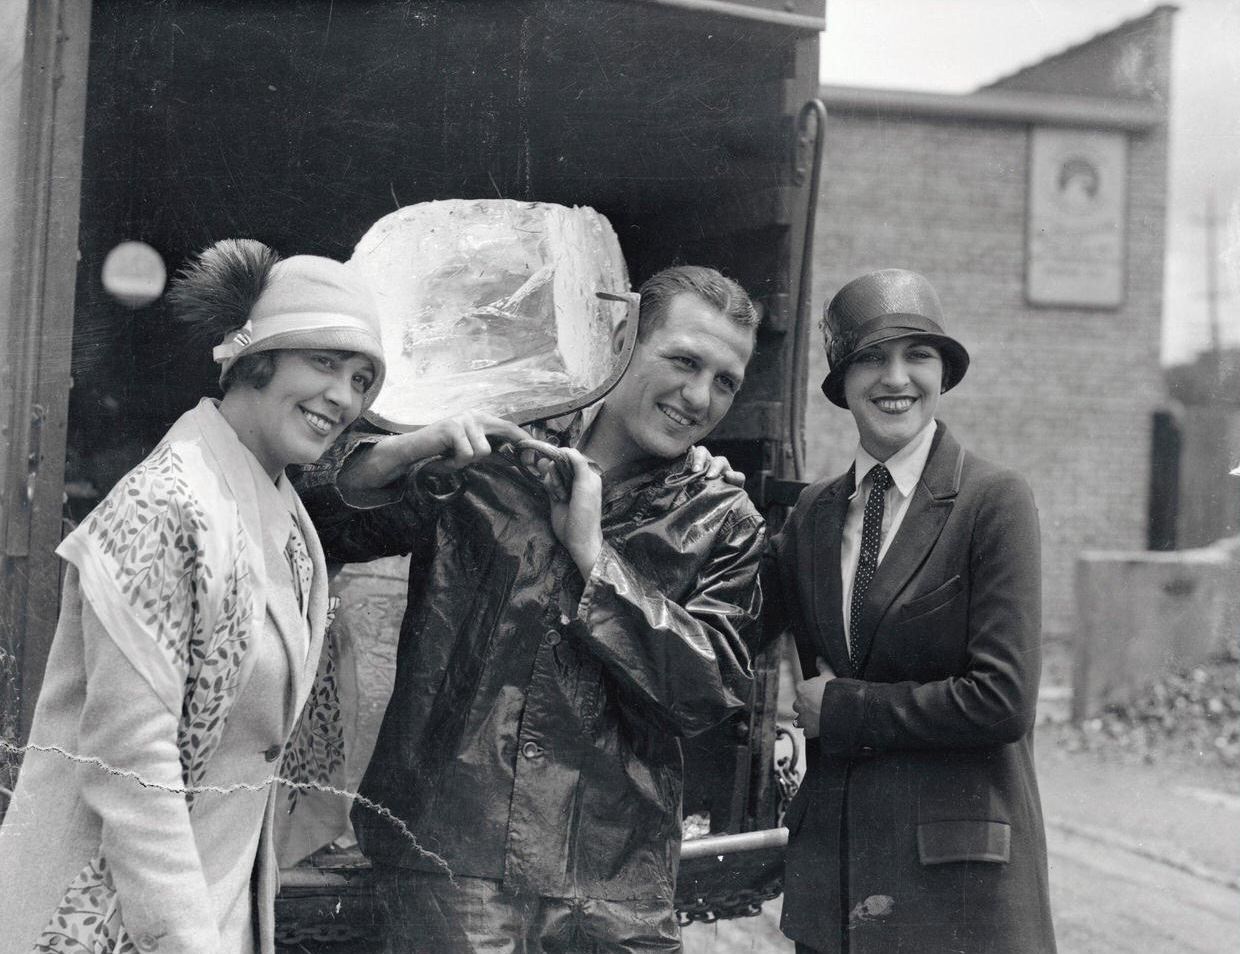 Red Grange as Iceman, 1920s